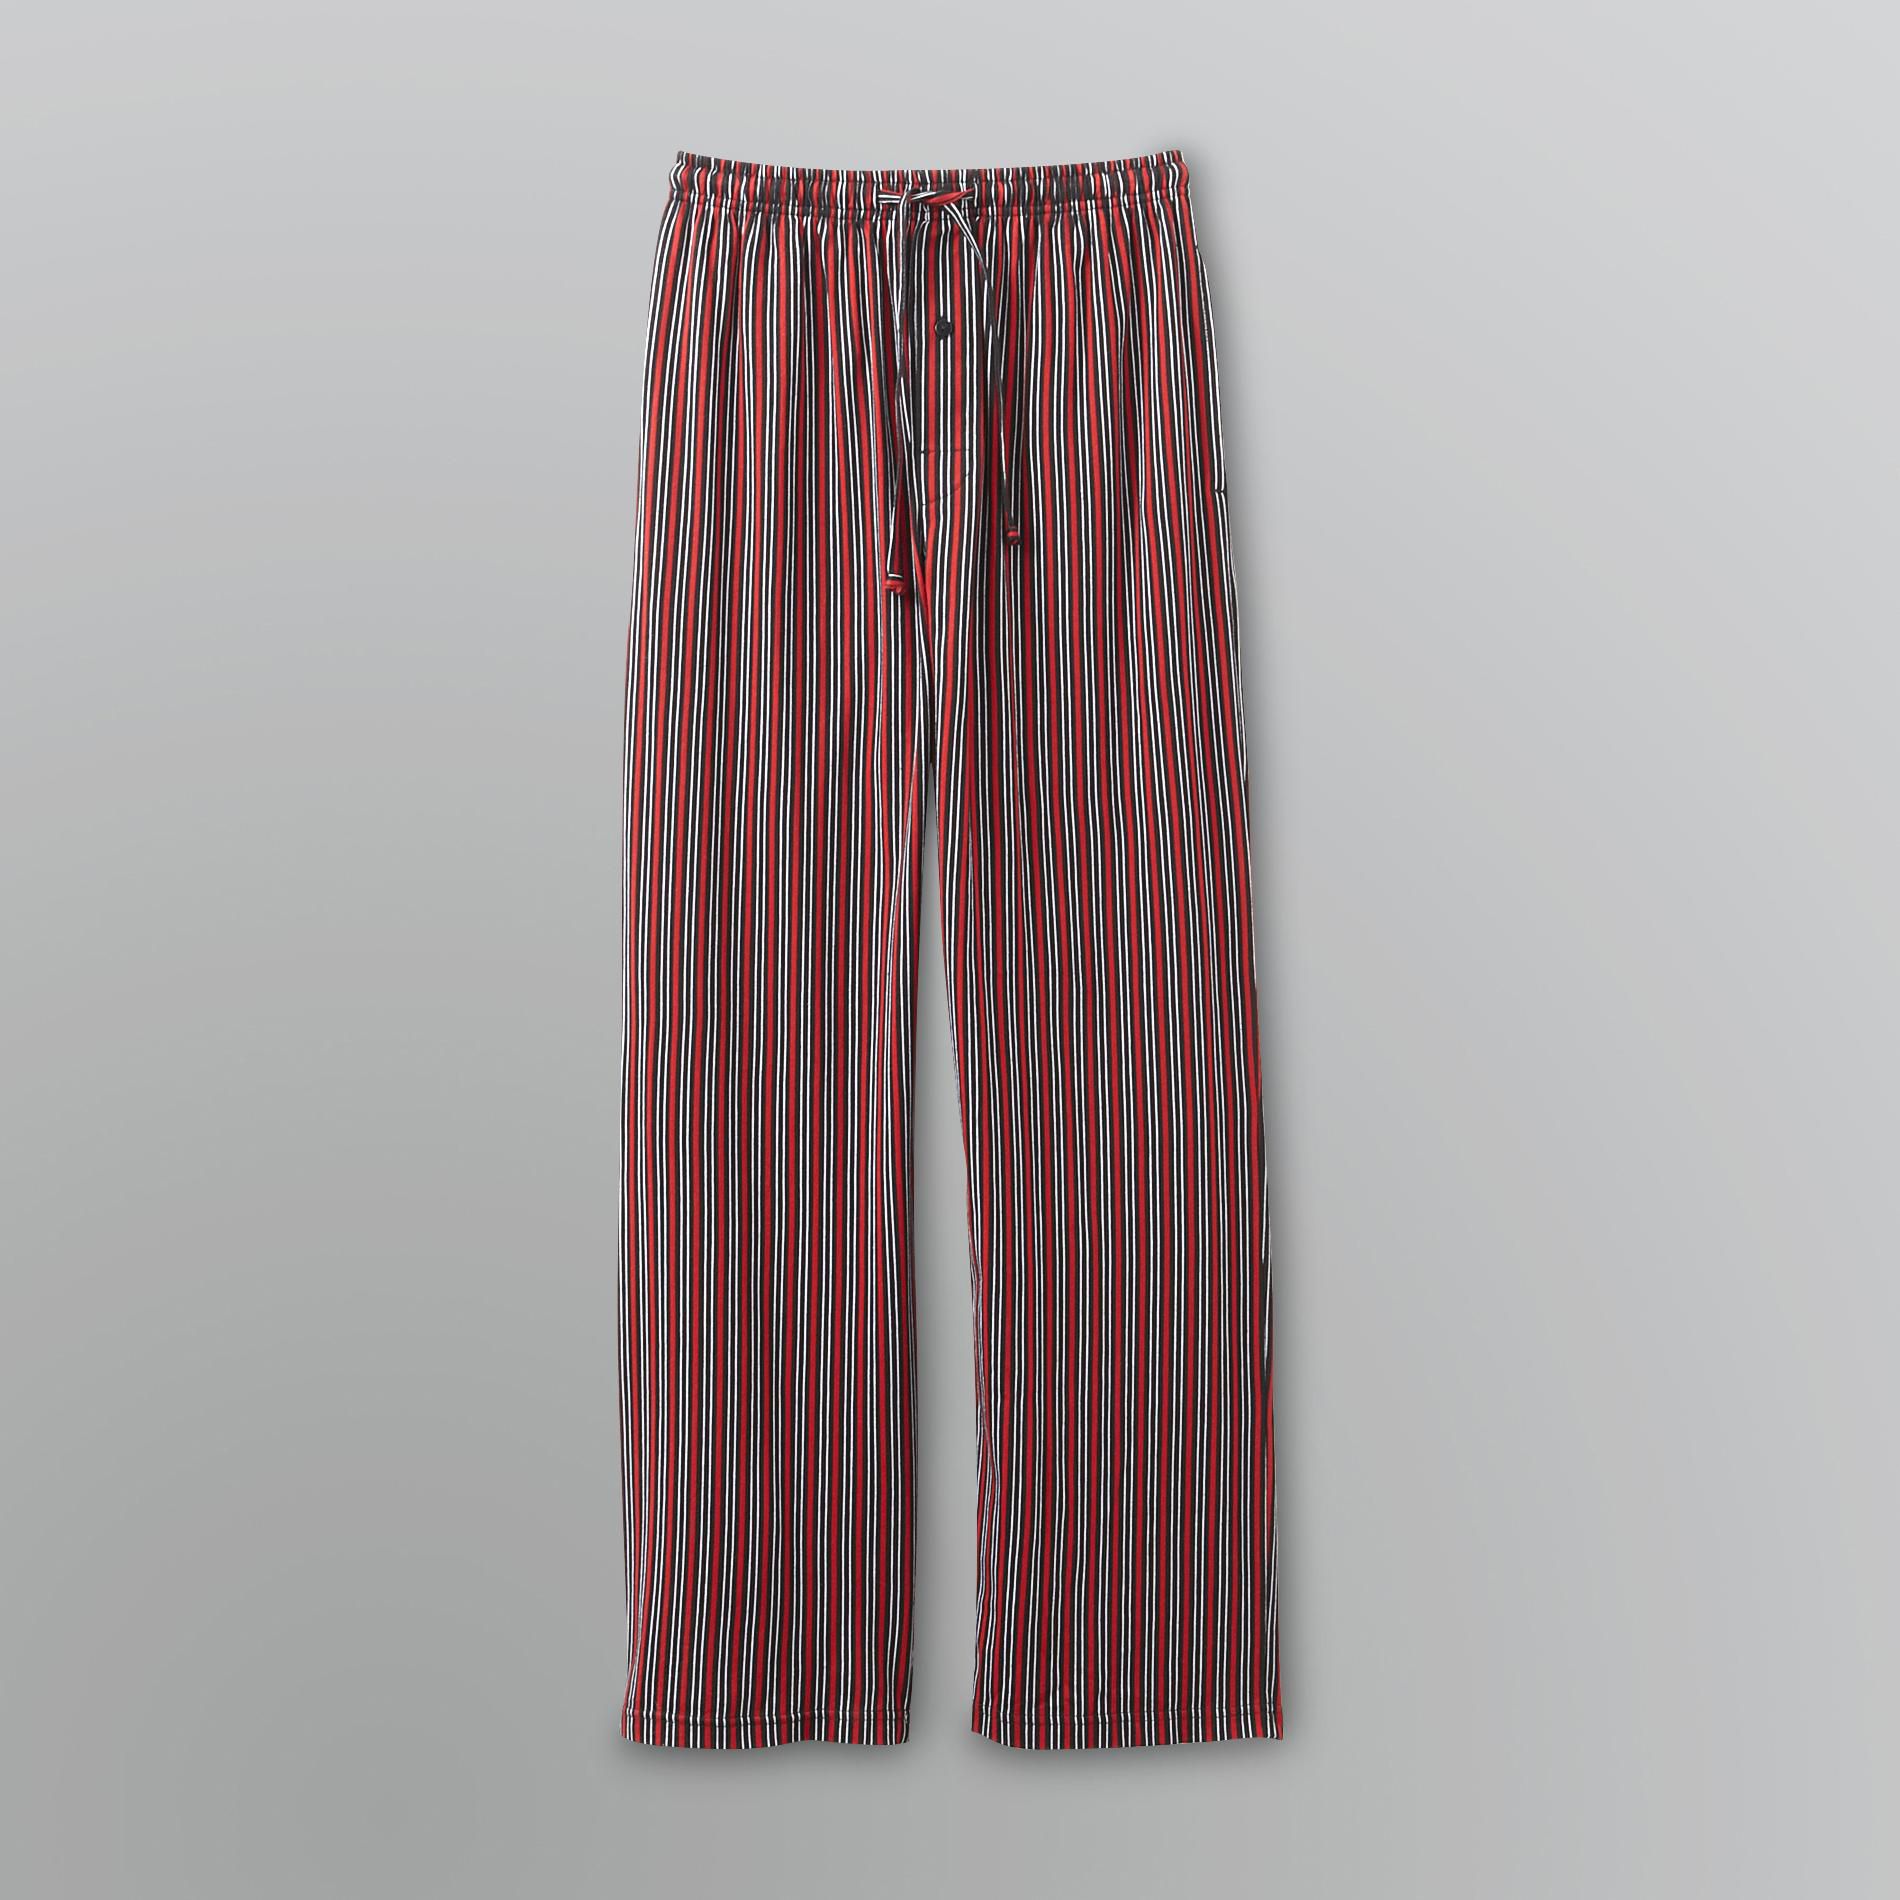 Covington Men's Striped Pajama Pants